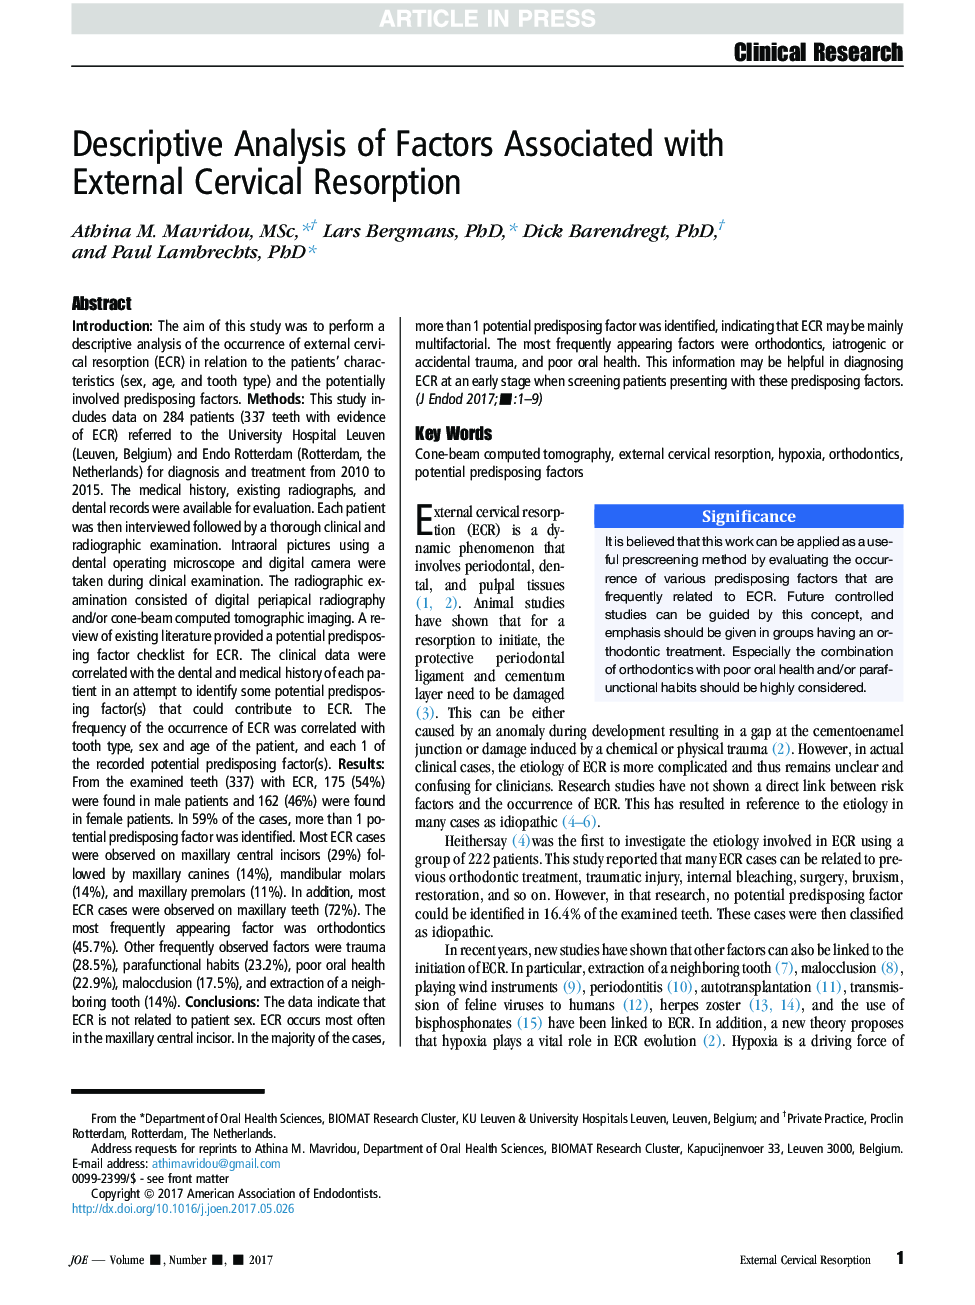 Descriptive Analysis of Factors Associated with External Cervical Resorption